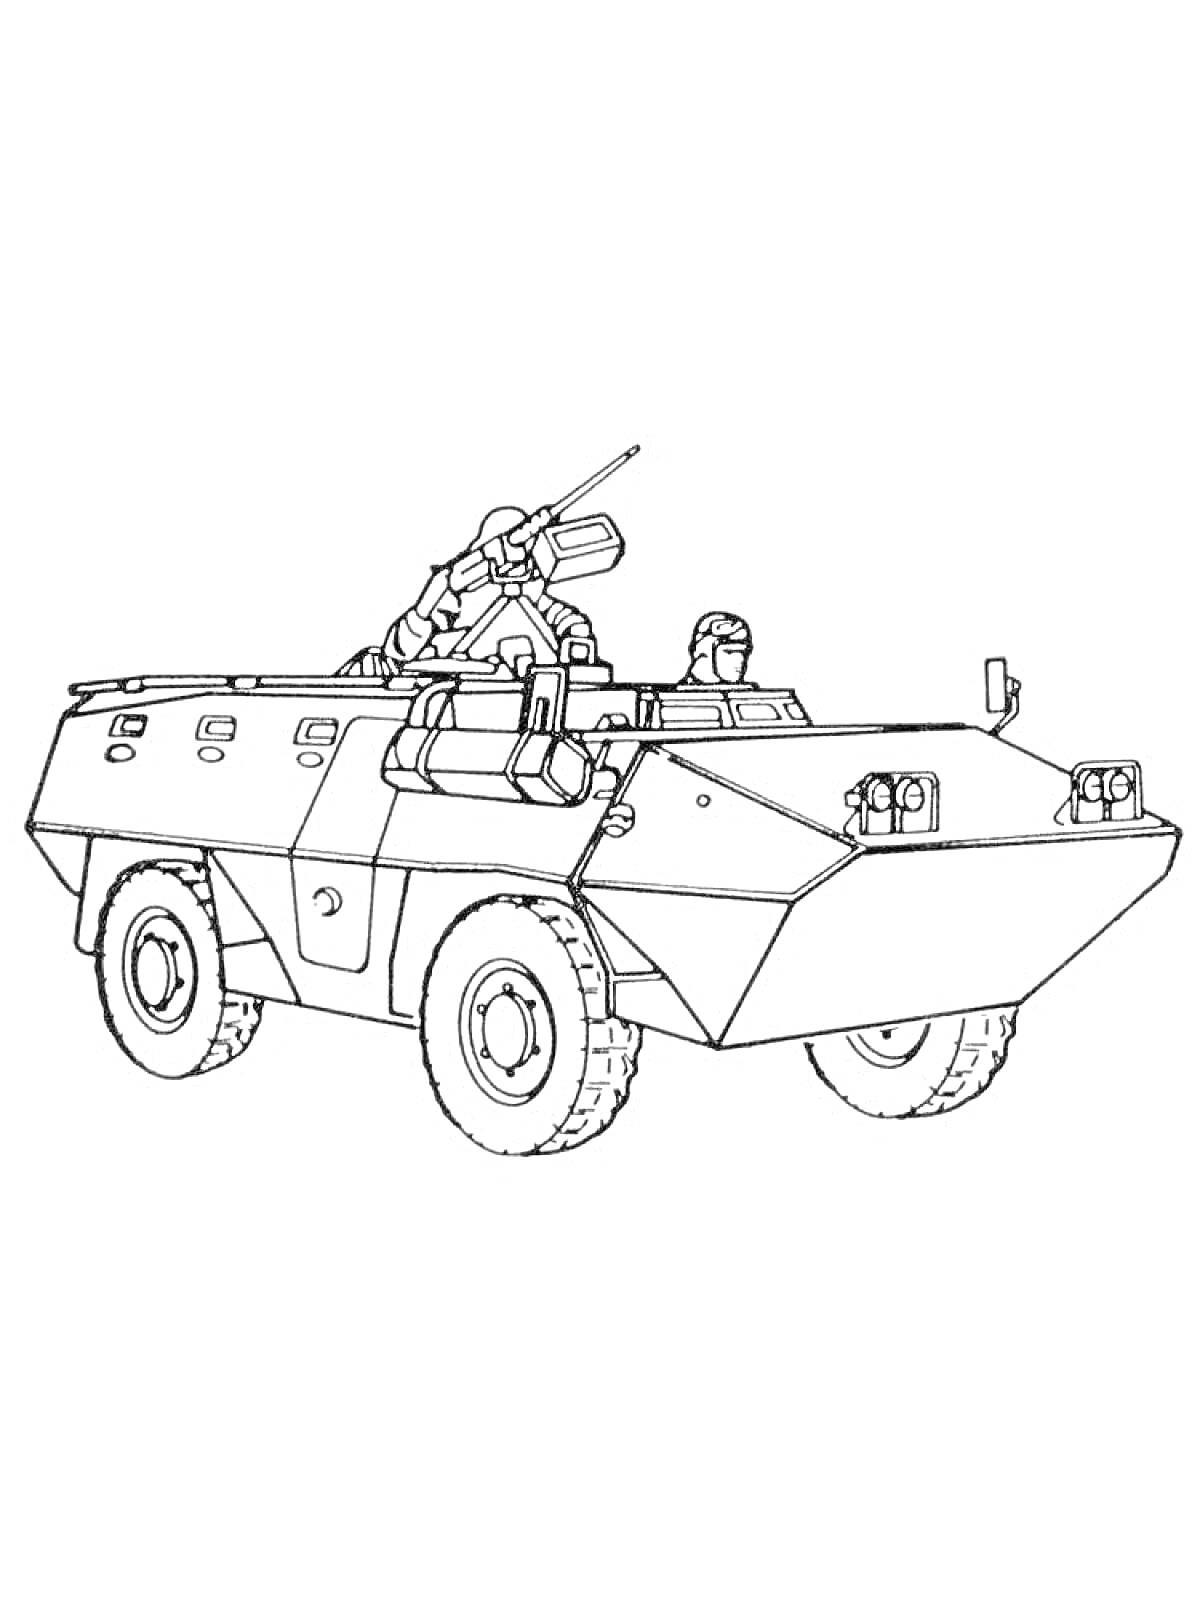 Раскраска Бронетранспортер с двумя солдатами, пулеметом, фарами, антеннами и колесами